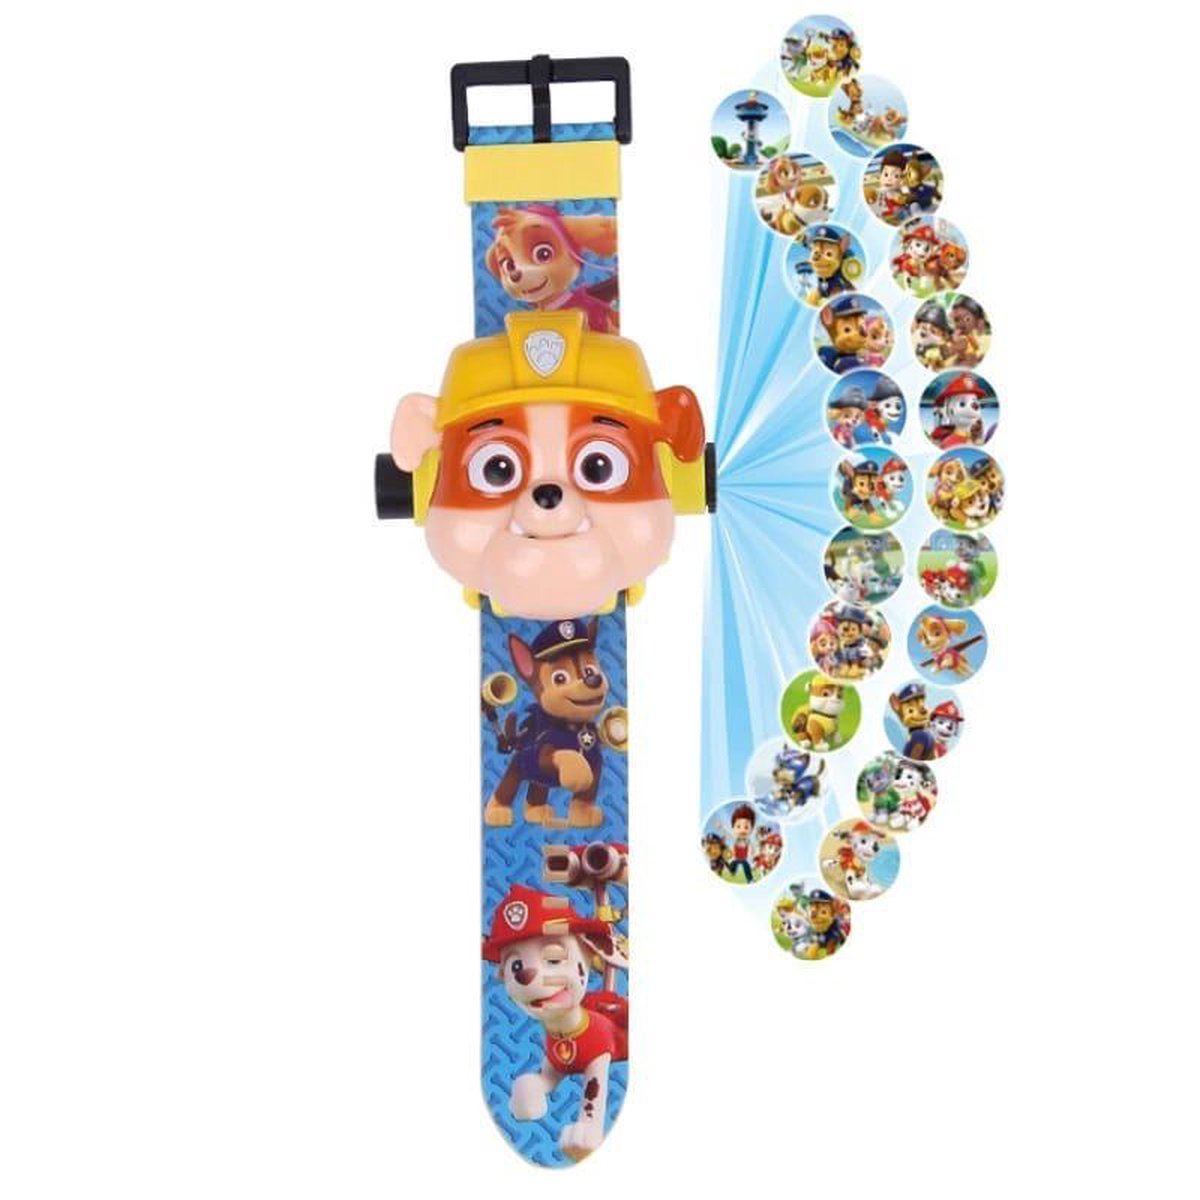 PAW Patrol Rubble Projector Horloge - Digitale Kinder Horloge - Speelgoed Watch - Marshall - Chase